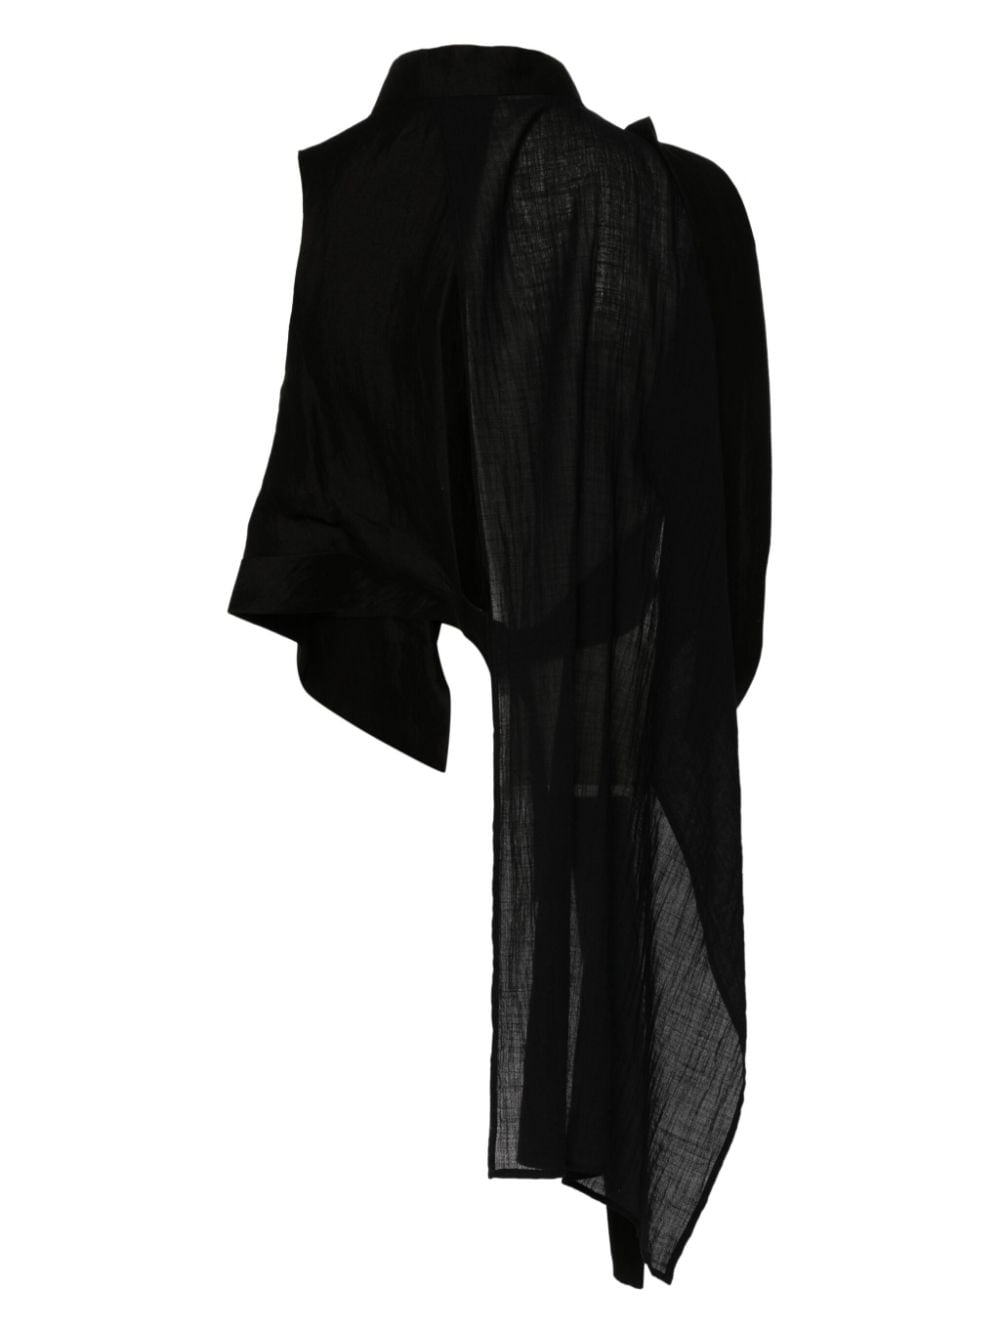 Yohji Yamamoto Asymmetrische blouse Zwart